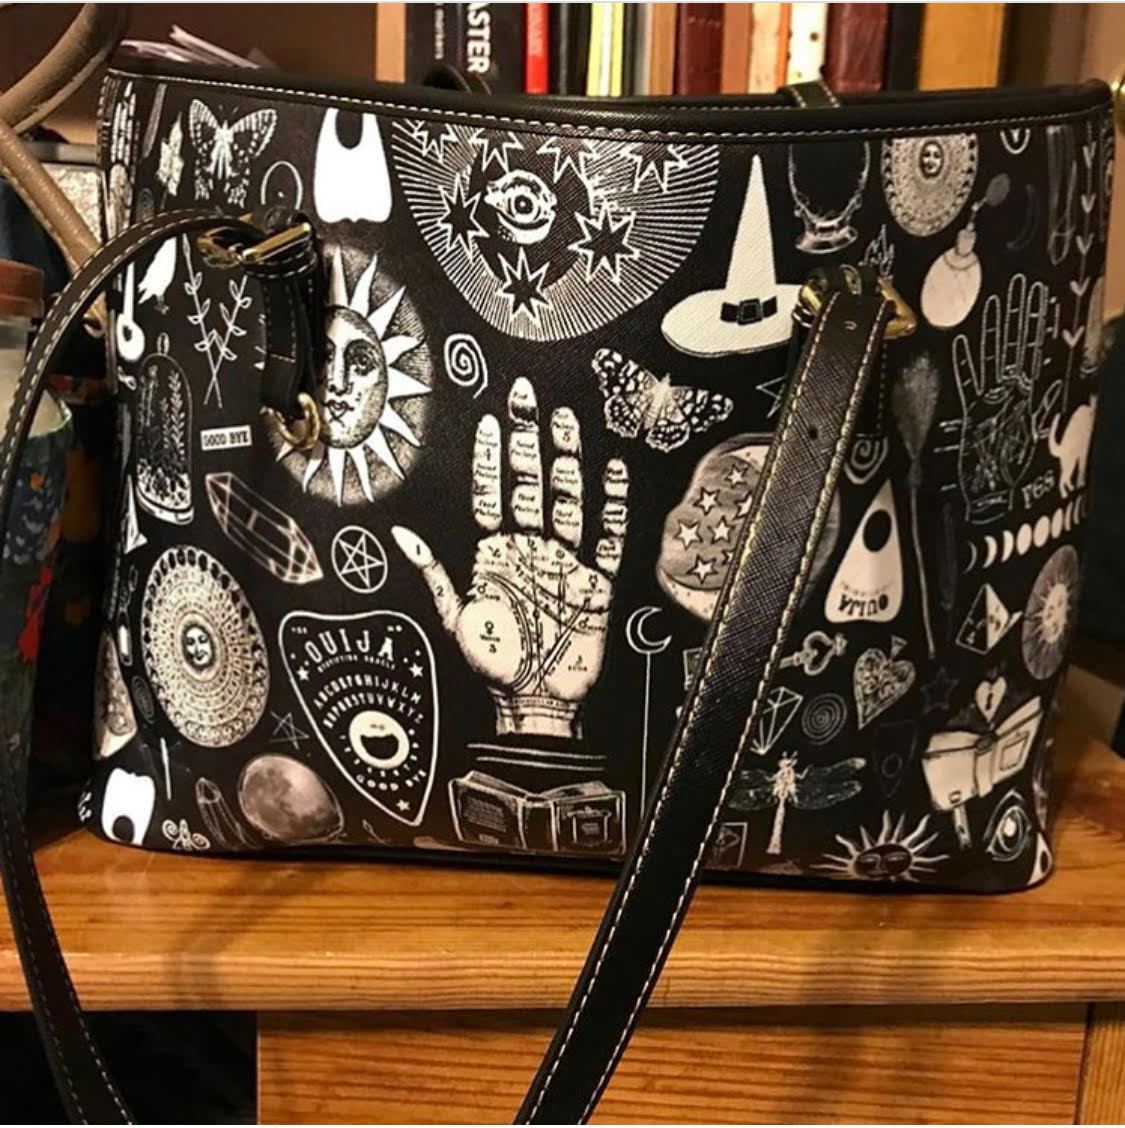 Dark Brown Leather Hobo Bag With Zipper Everyday Shoulder Bag Limited  Edition - Etsy